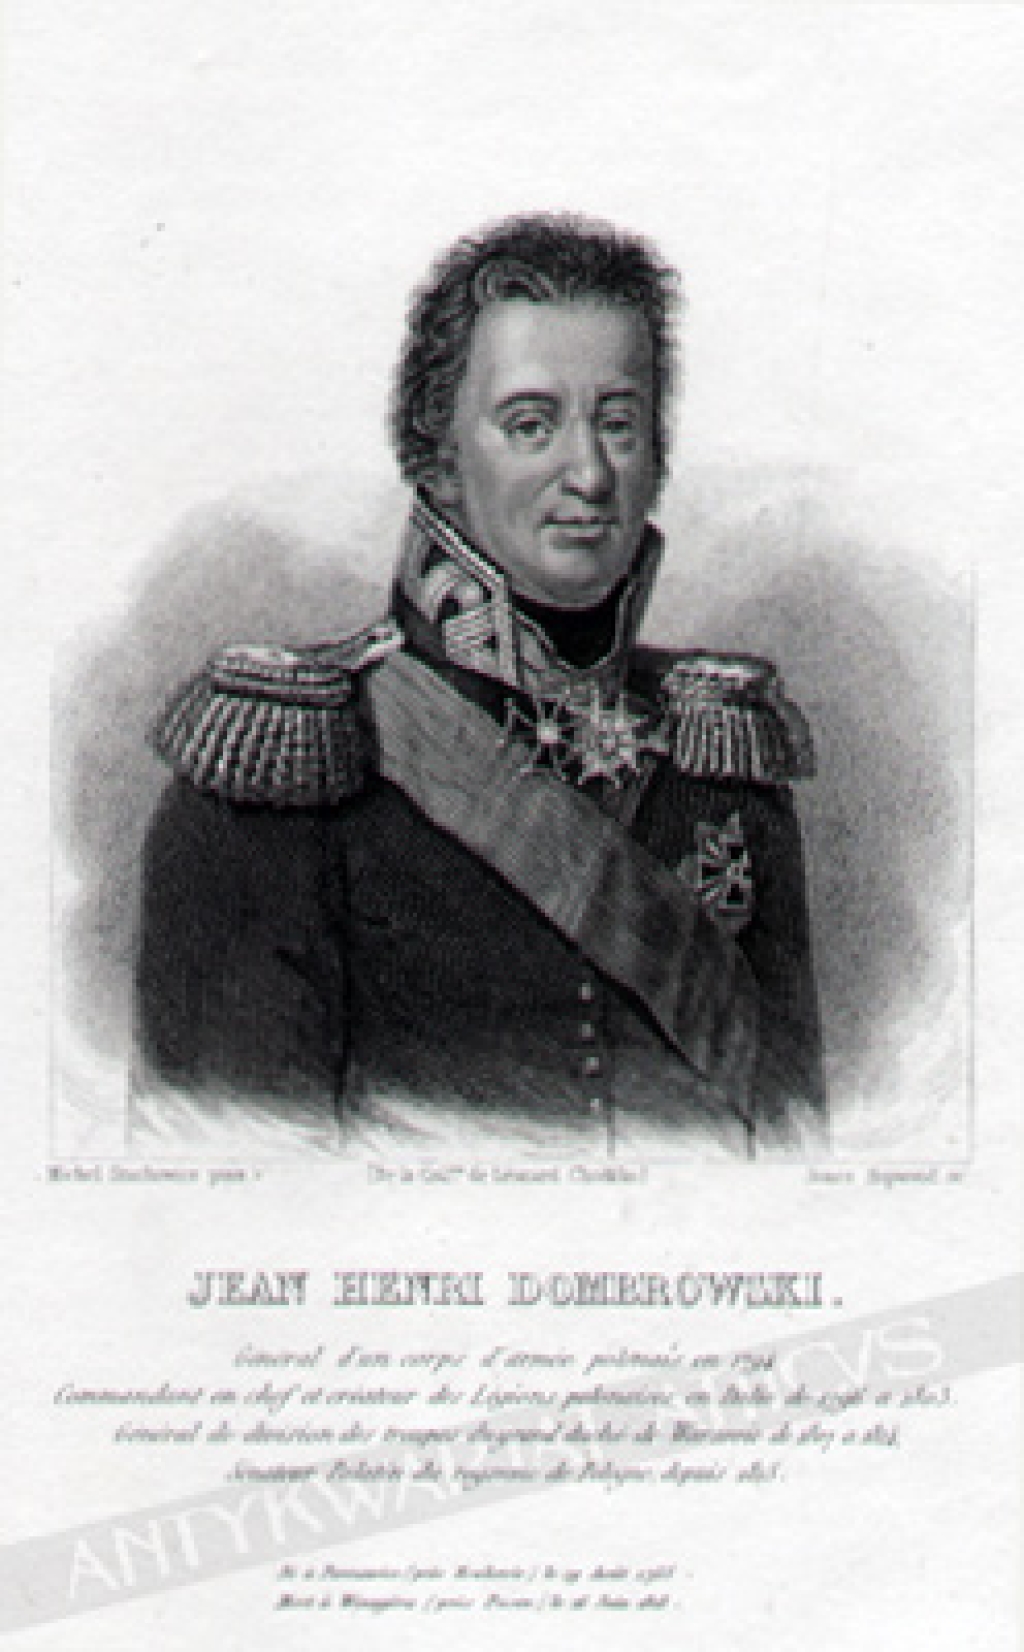 [rycina, ok. 1835-37] Jean Henri Dombrowski [Jan Henryk Dąbrowski]